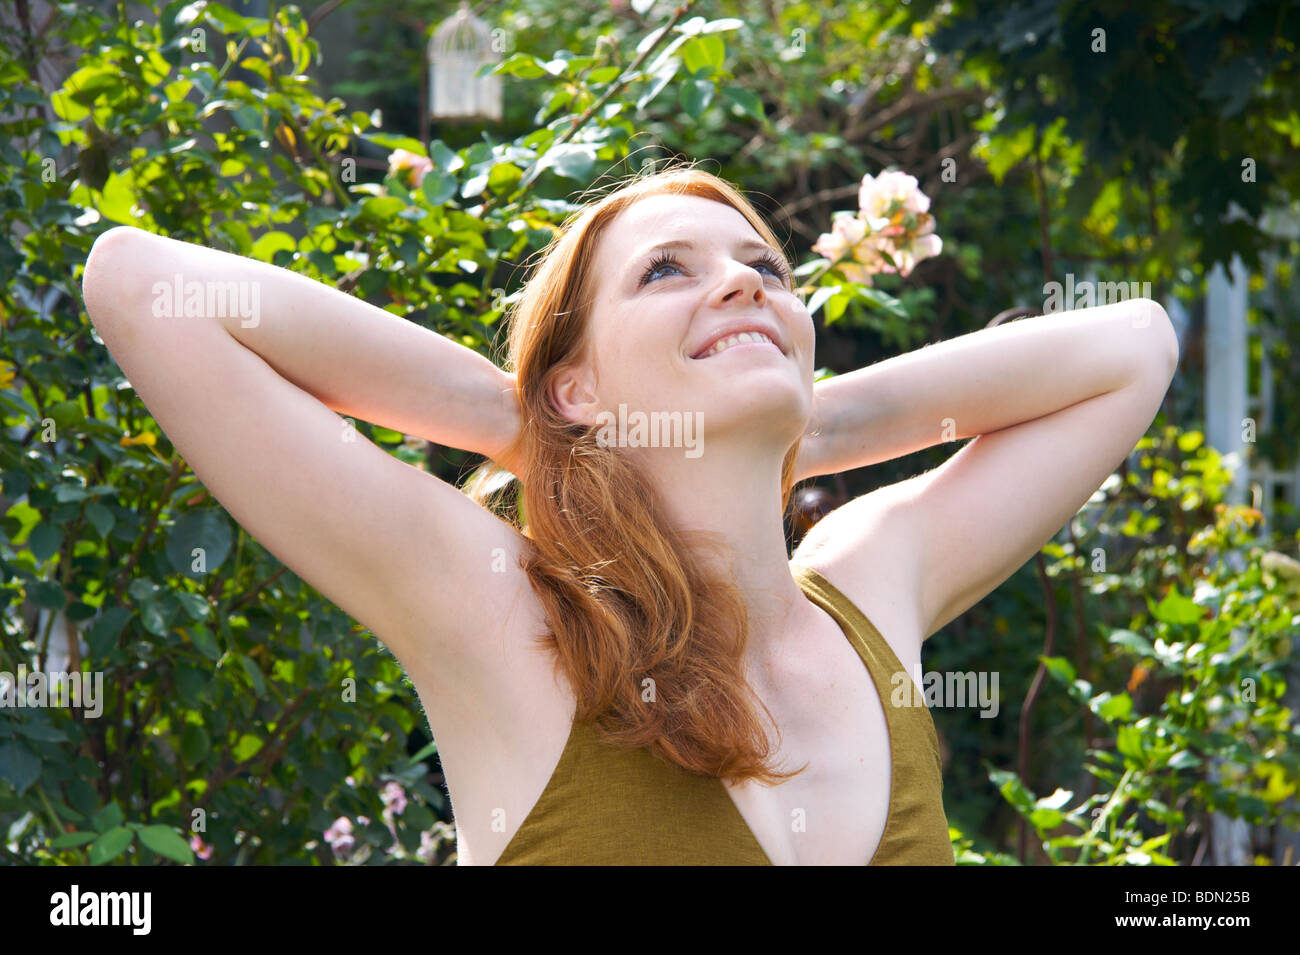 Young woman relaxing into a garden Stock Photo